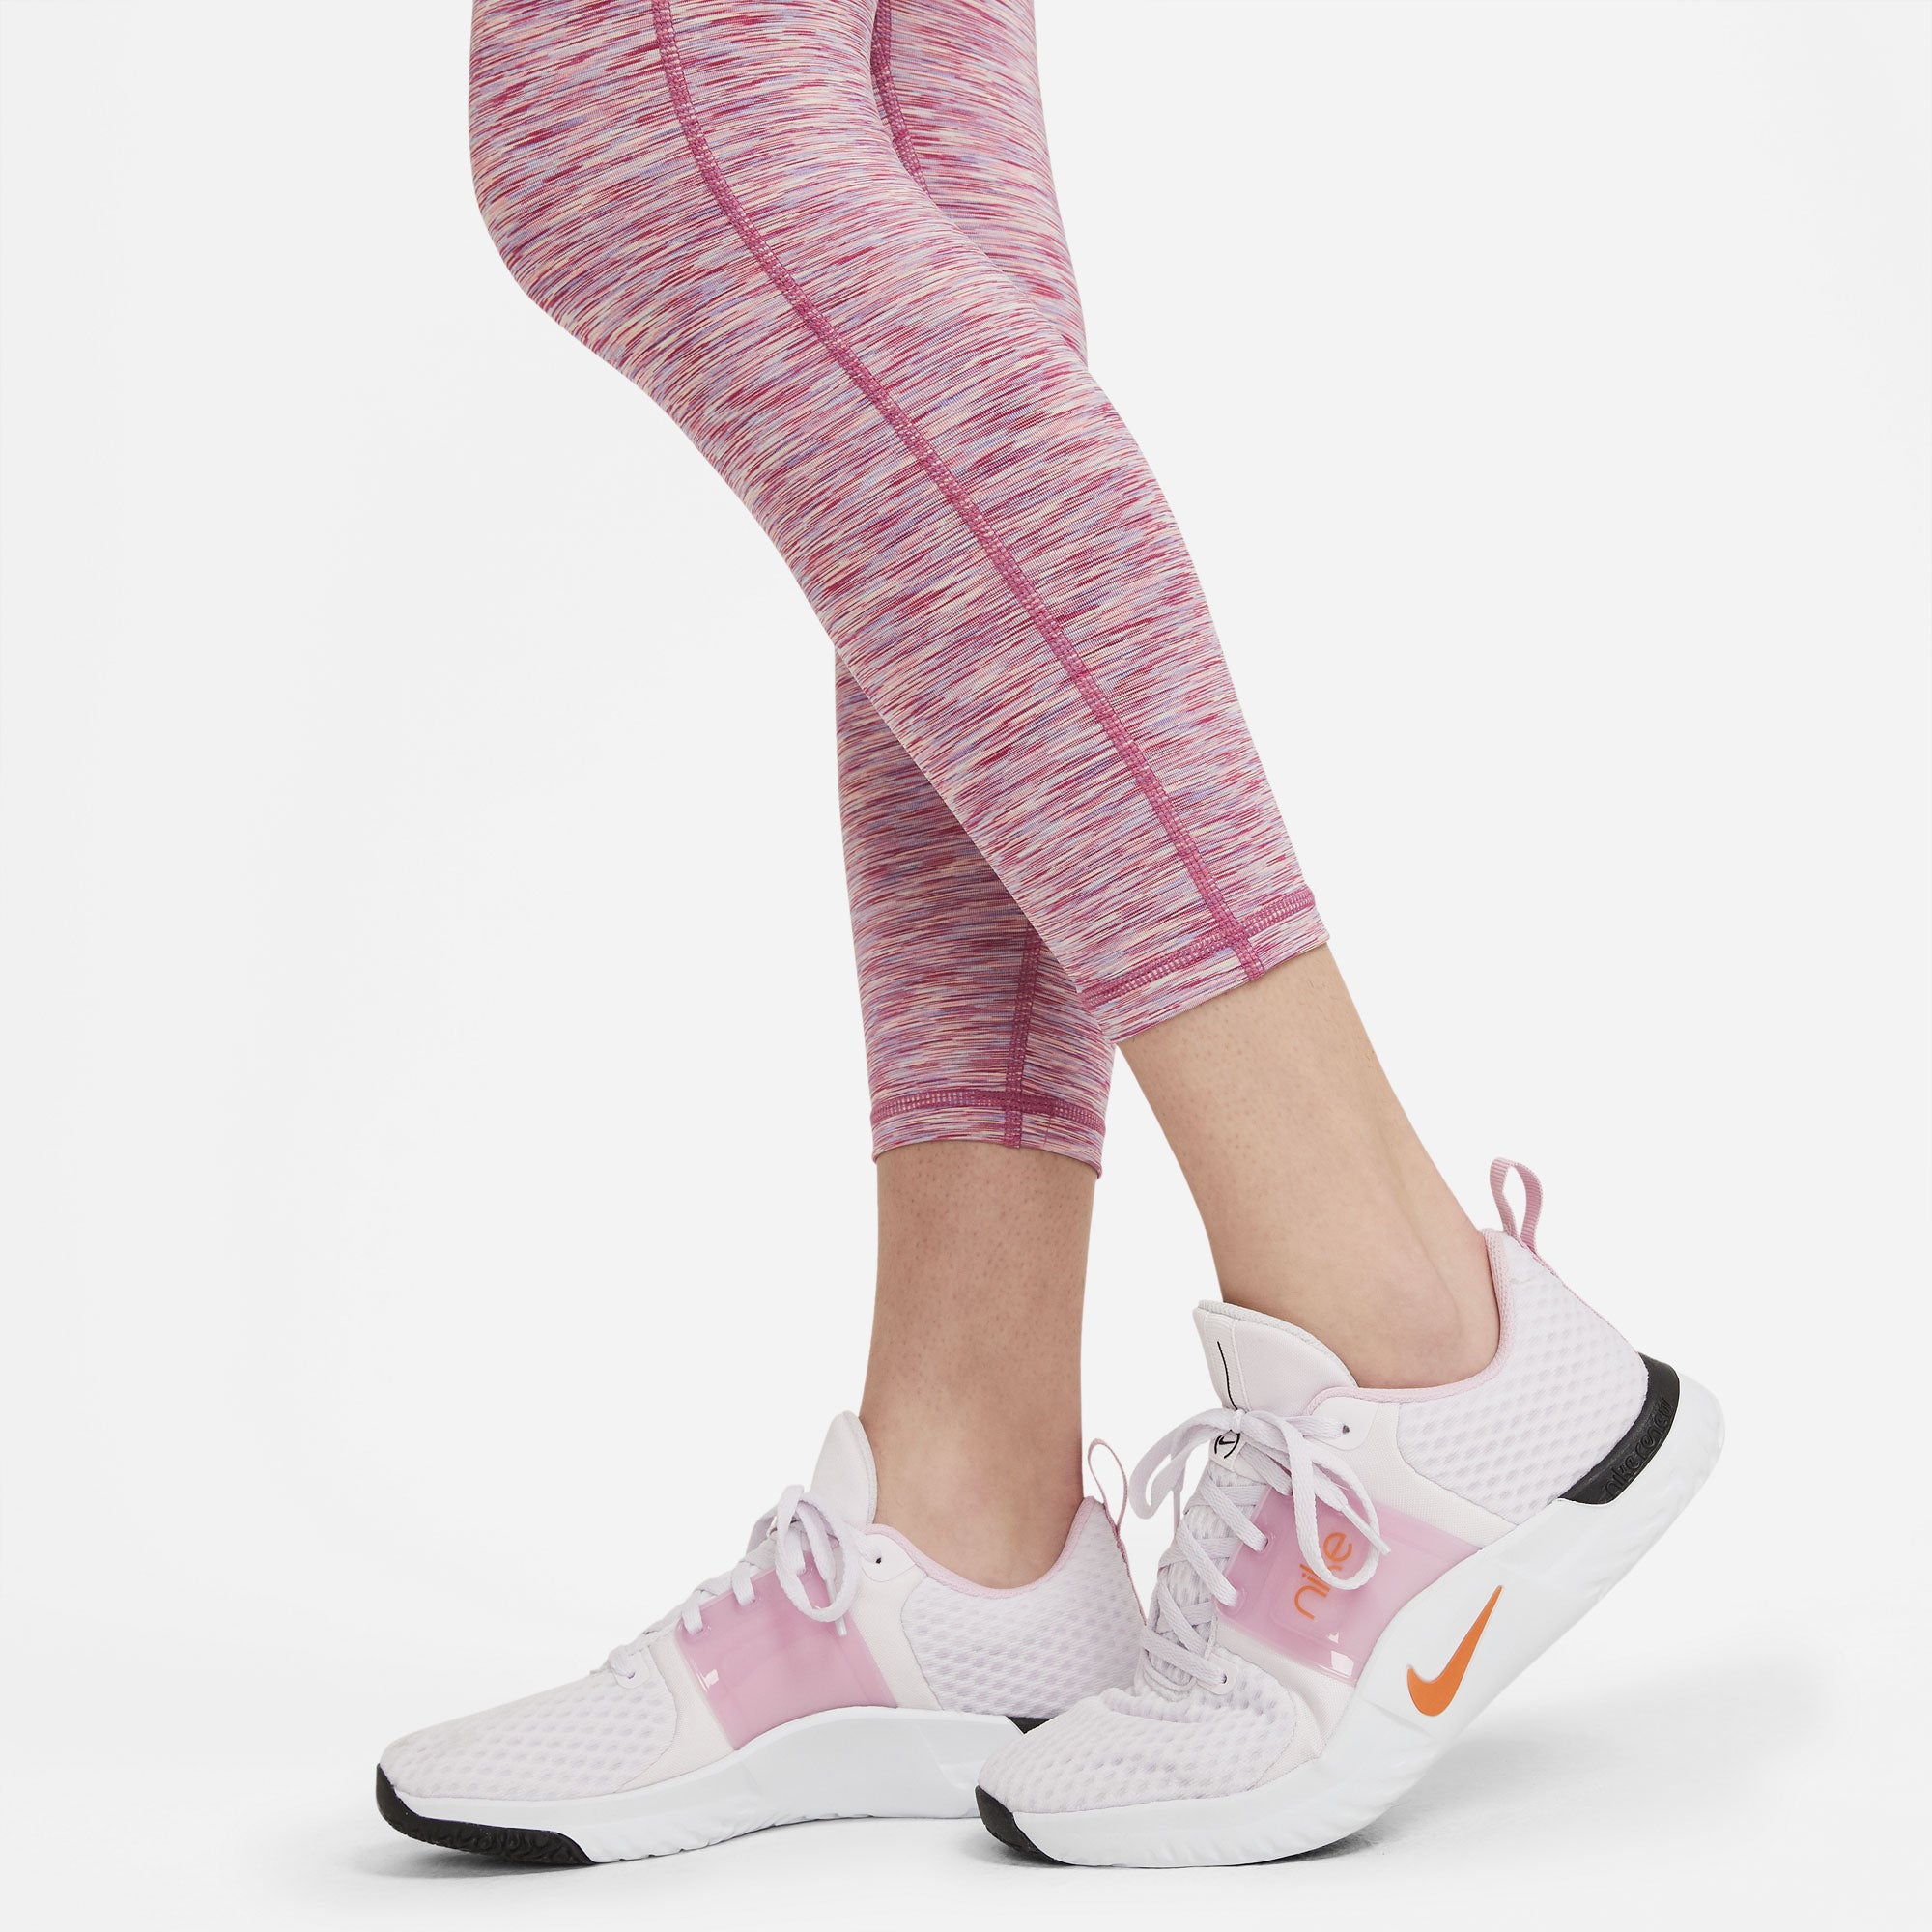 Nike Women's Cropped Space-Dye Tights Pink (5)